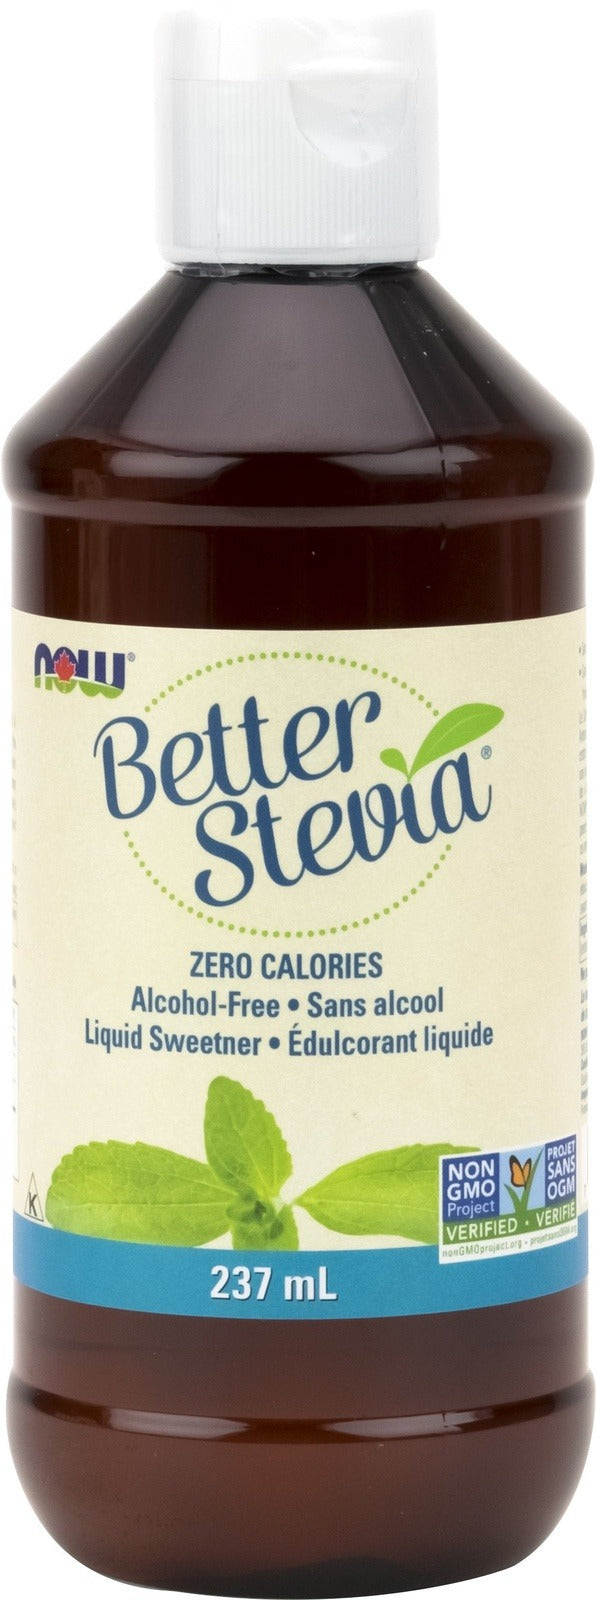 NOW Better Stevia Zero-Calorie Liquid Sweetener Image 1